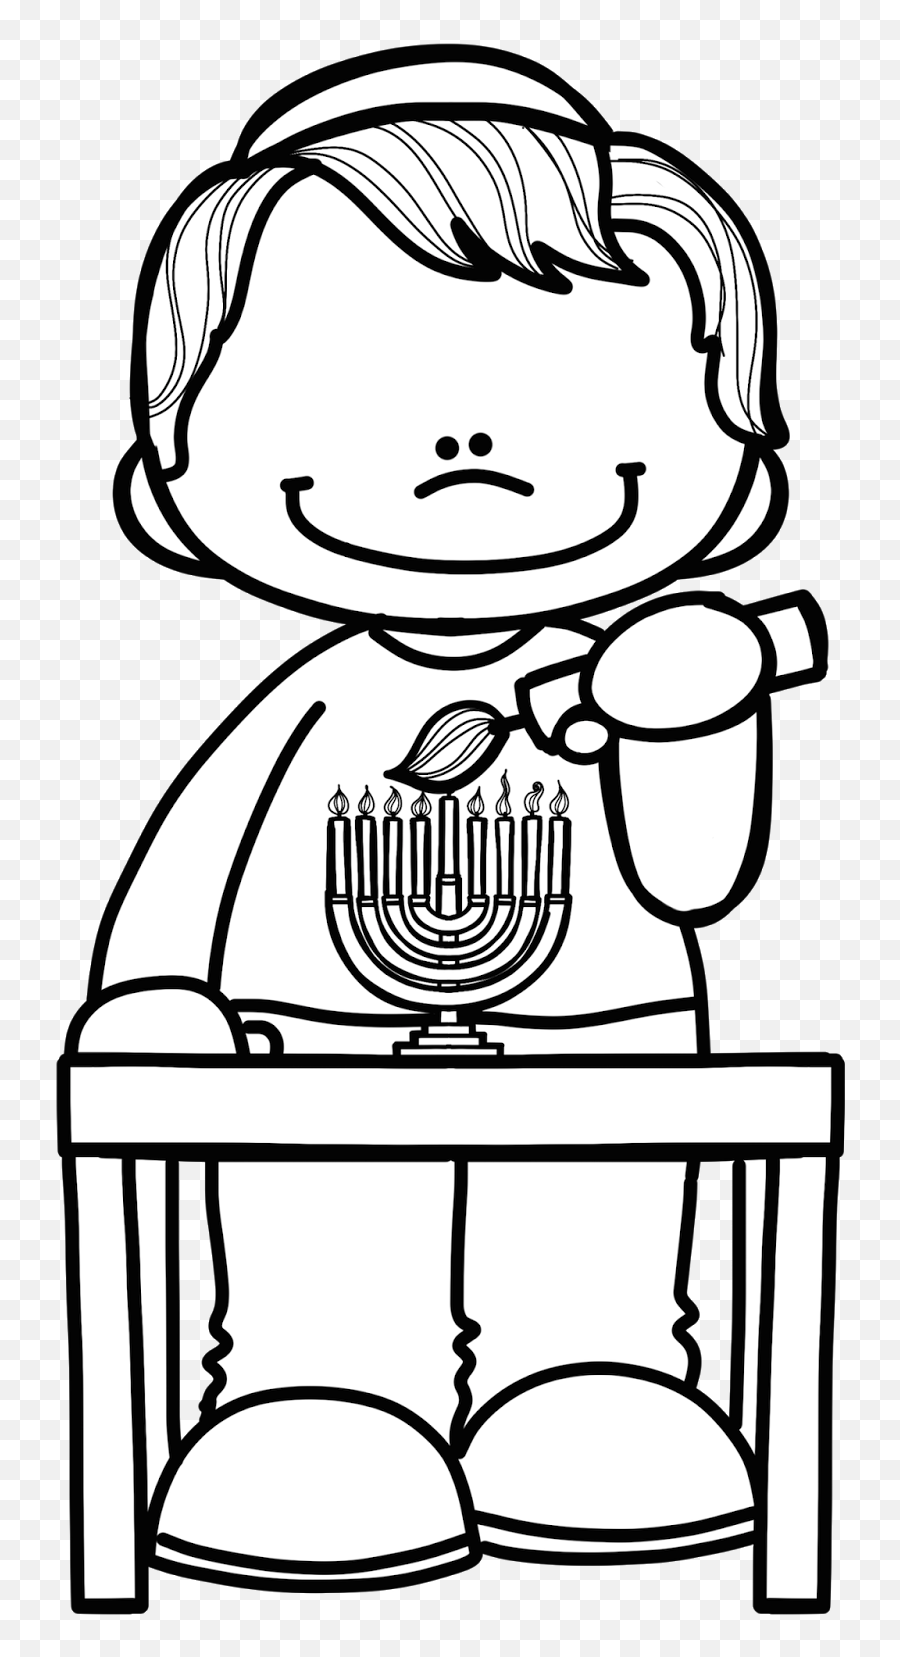 Happy Hanukkah Here Is A Freebie To - Hanukkah Clipart Black And White Emoji,Hanukkah Clipart